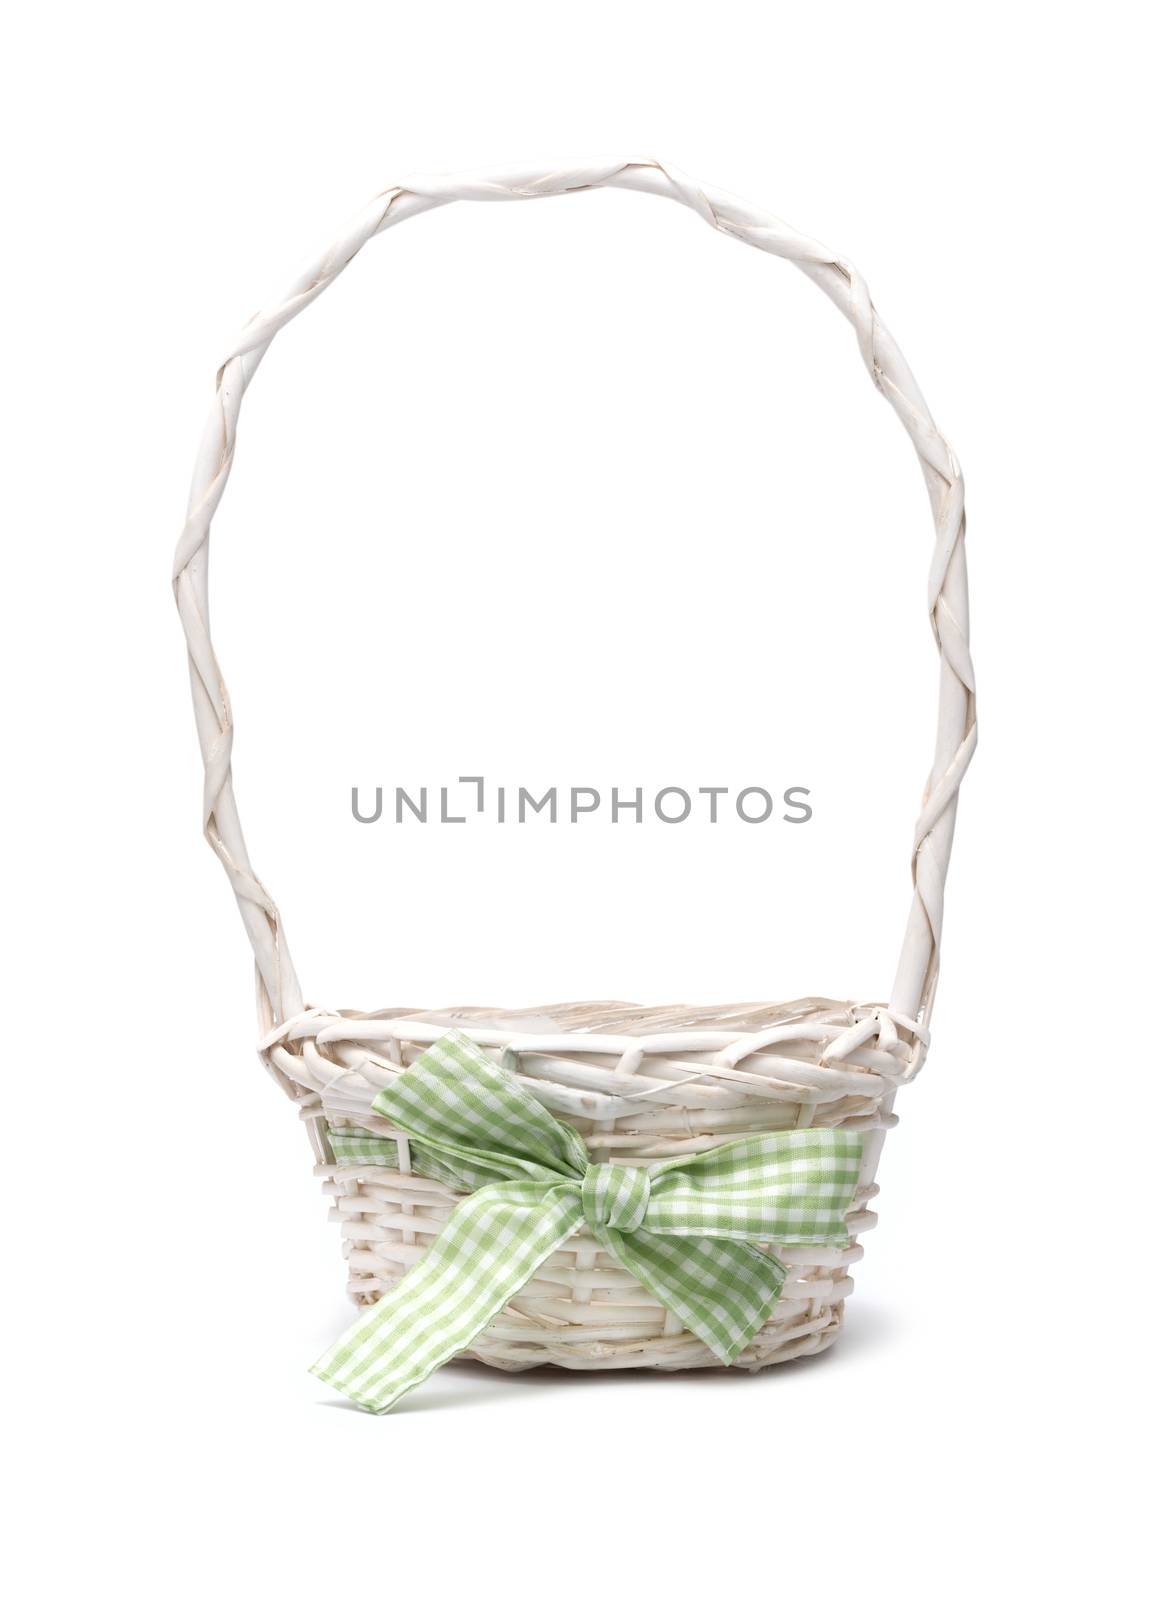 Woven basket on white background